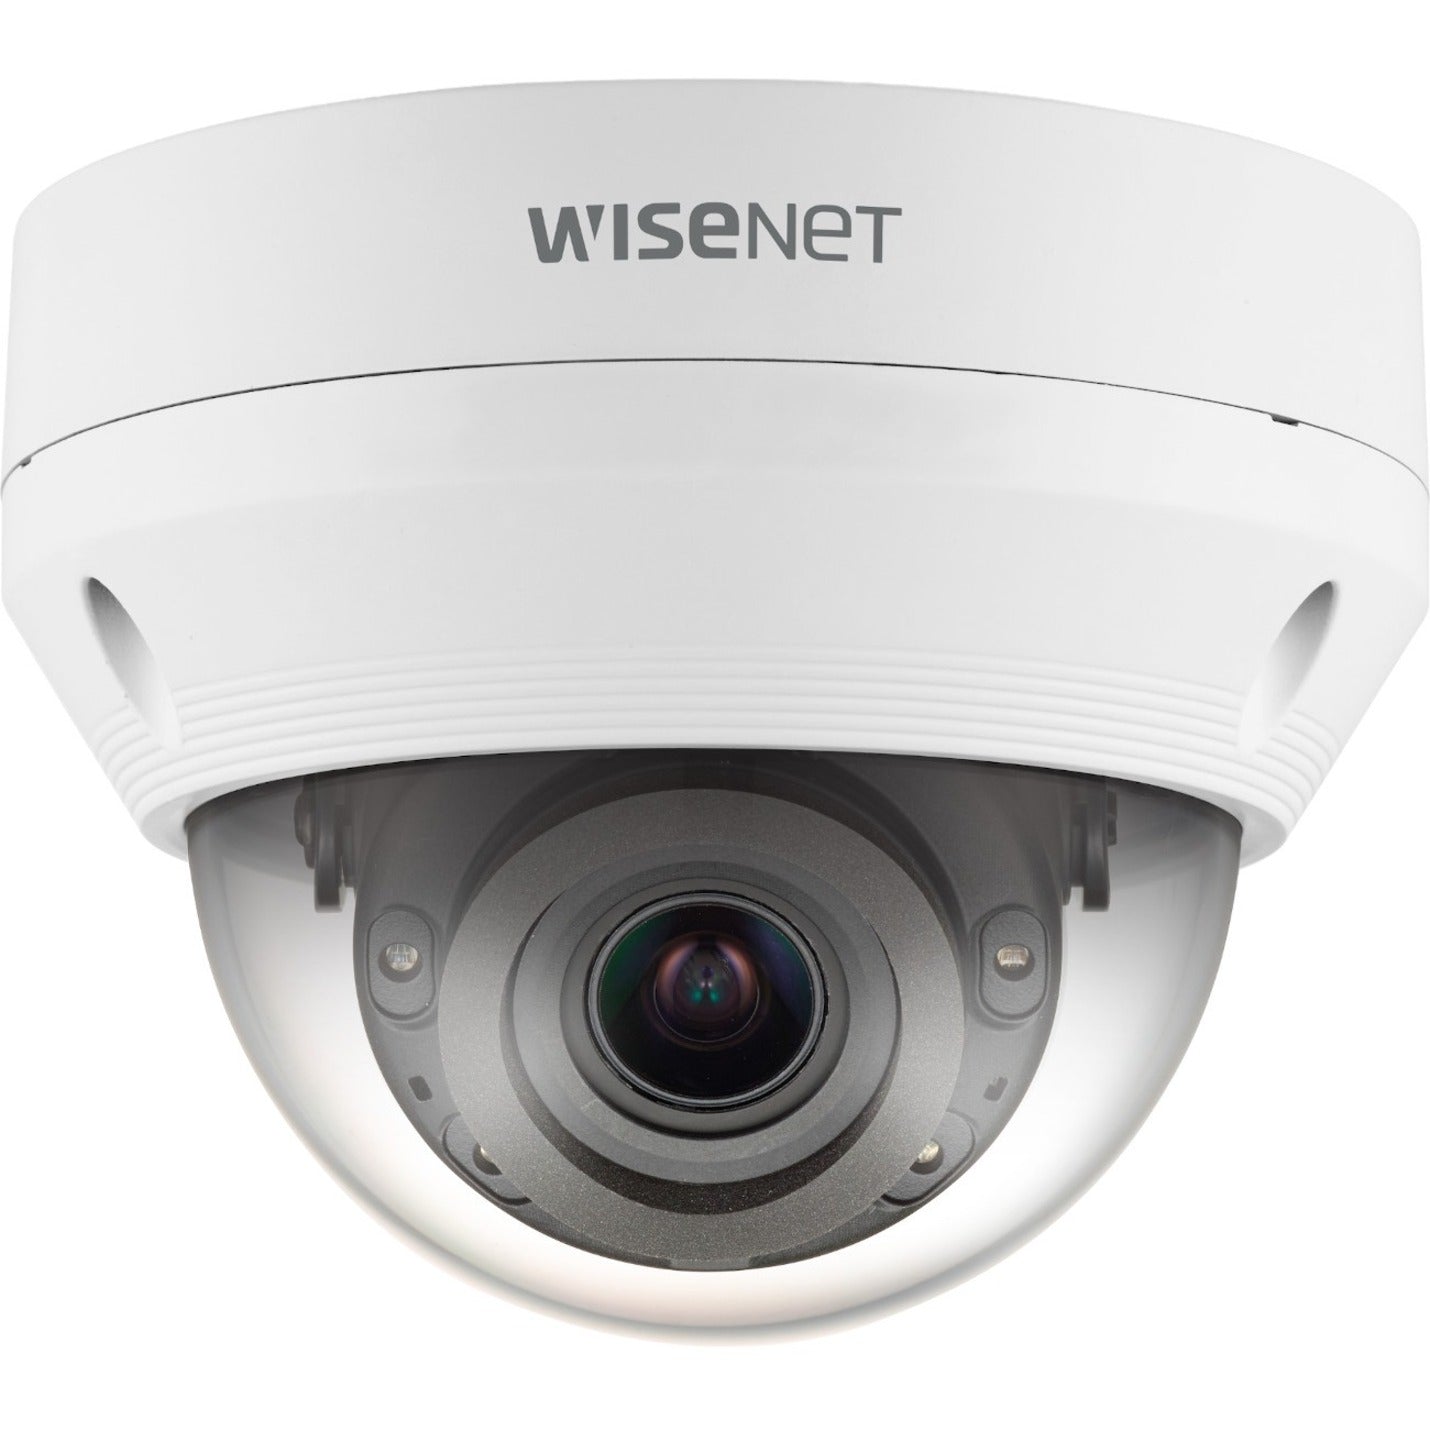 Wisenet QNV-7082R 4MP Network IR Vandal Dome Camera, Varifocal Lens, H.265 Video Format, Memory Card Storage, IK10 Impact Protection Rating, IP66 Ingress Protection Rating